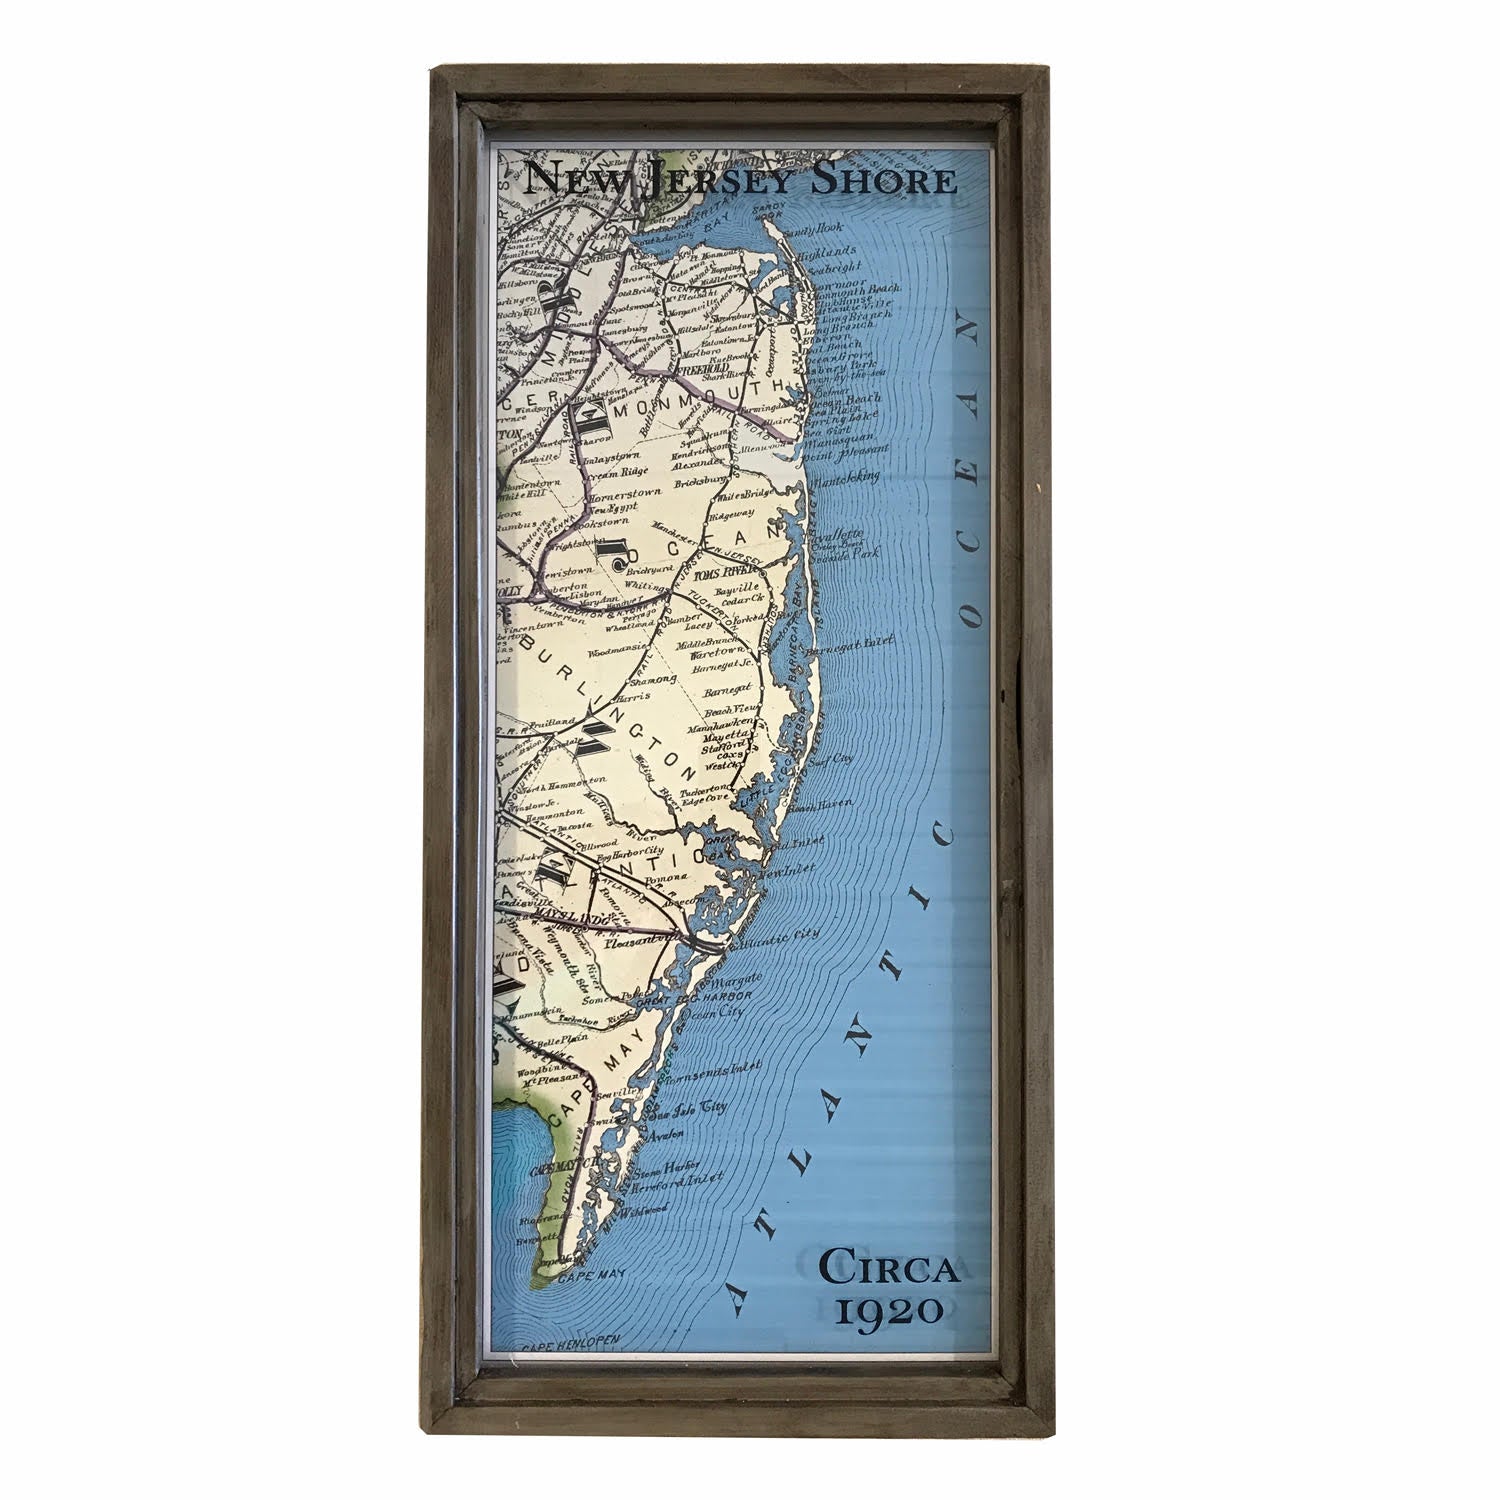 Vintage Jersey Shore, Circa 1920 Map